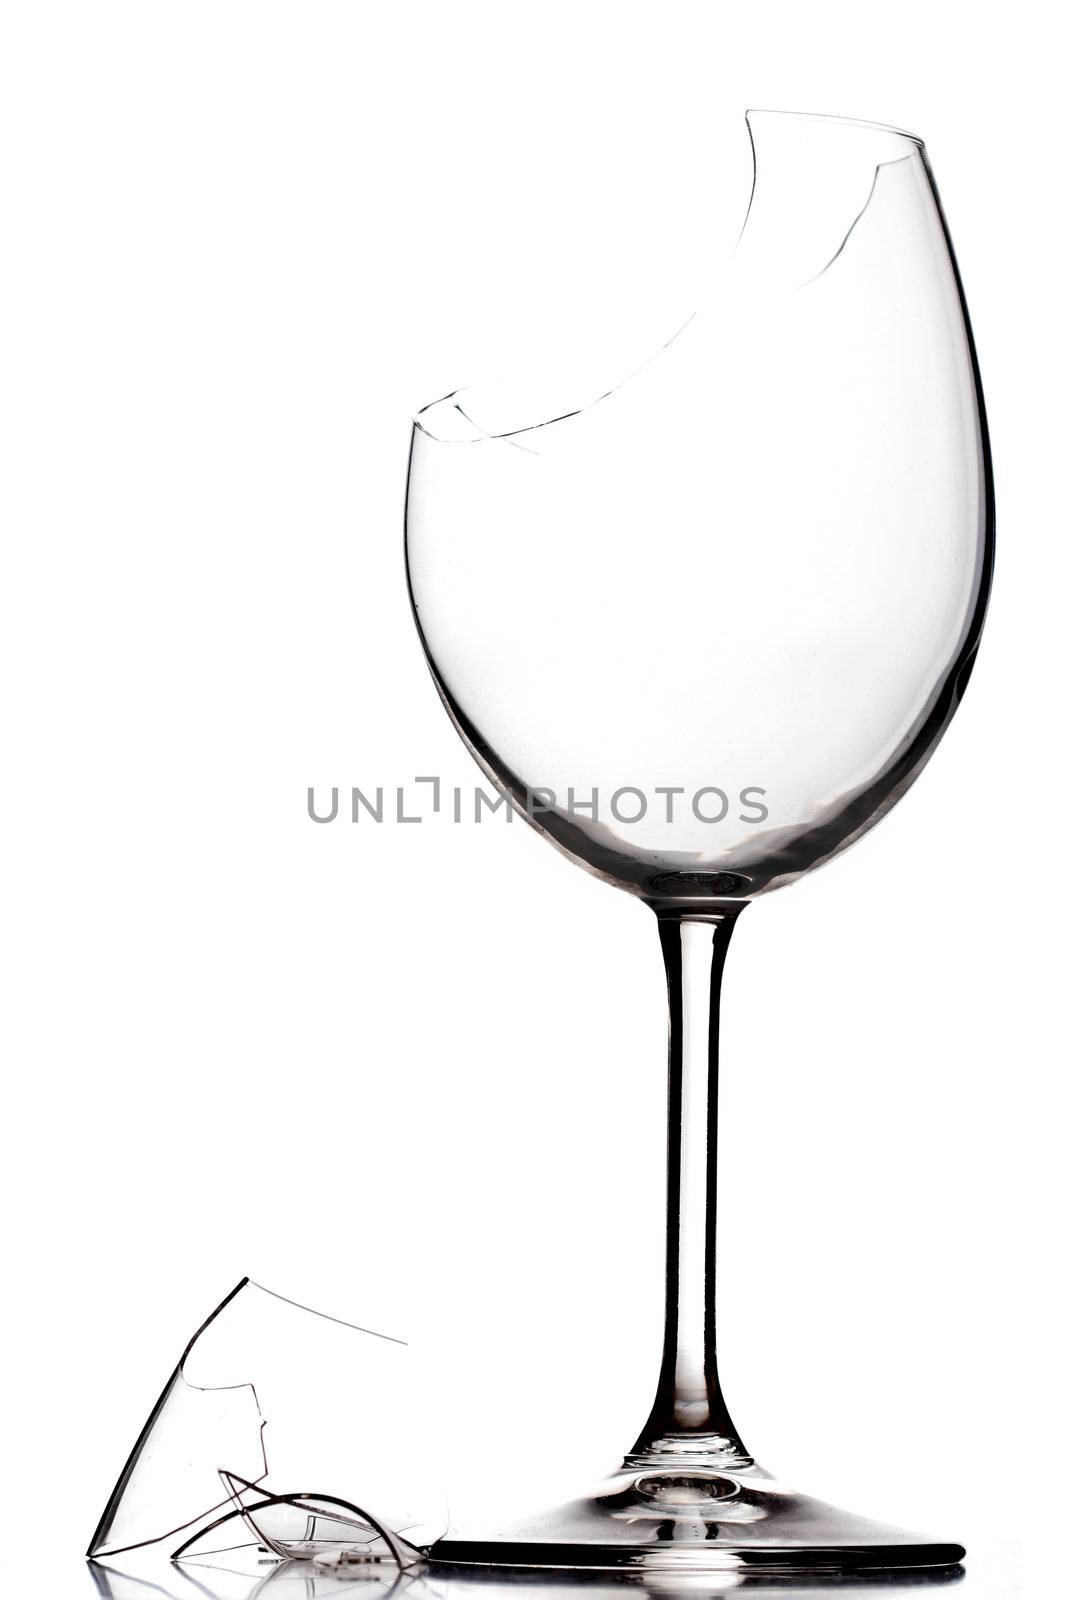 broken wine glass by kokimk